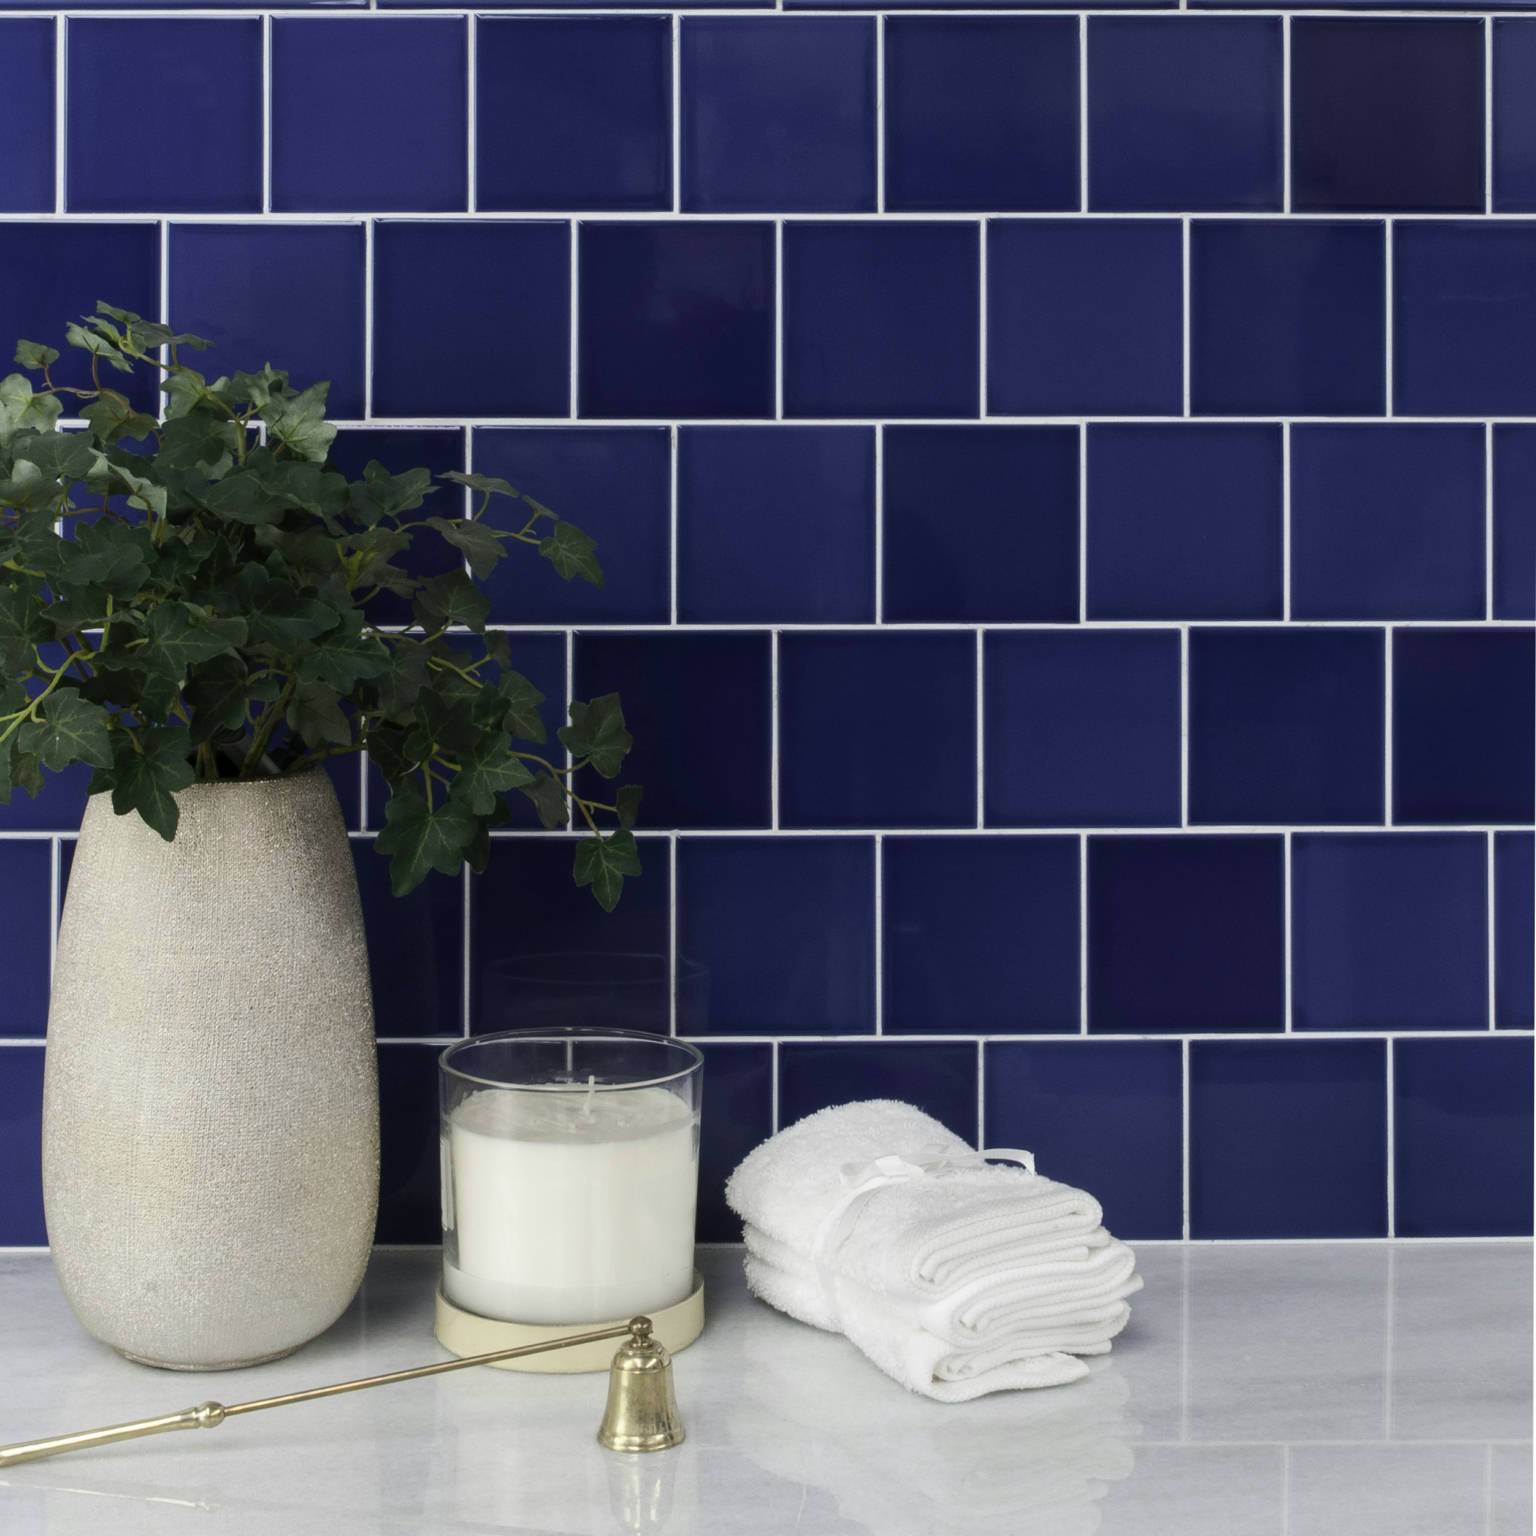 blue ceramic tile wall covering in restaurant interior